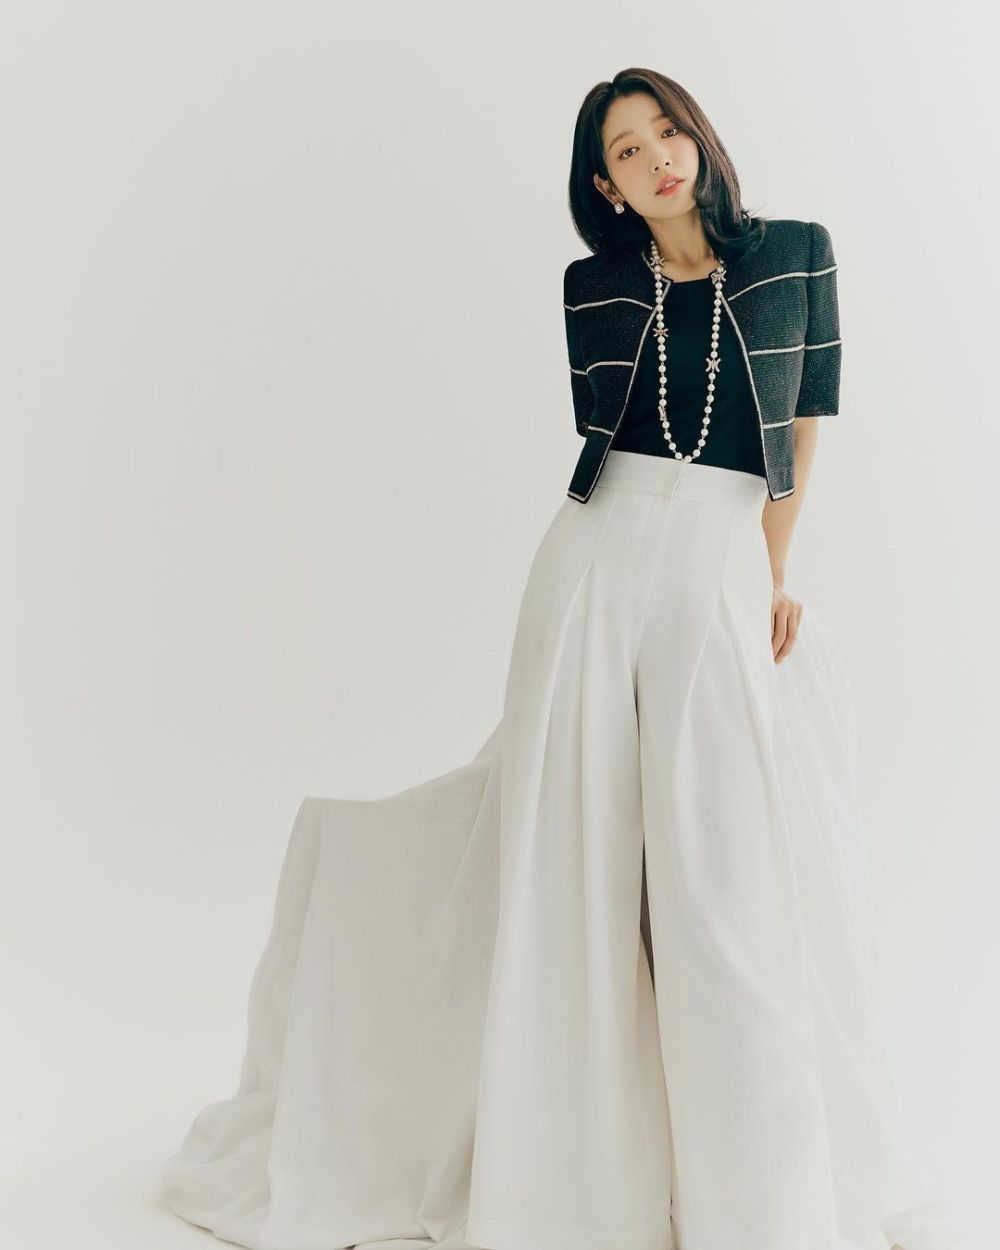 11 Ide Outfit Formal Look ala Aktris Korea, Gaya Berkelas!